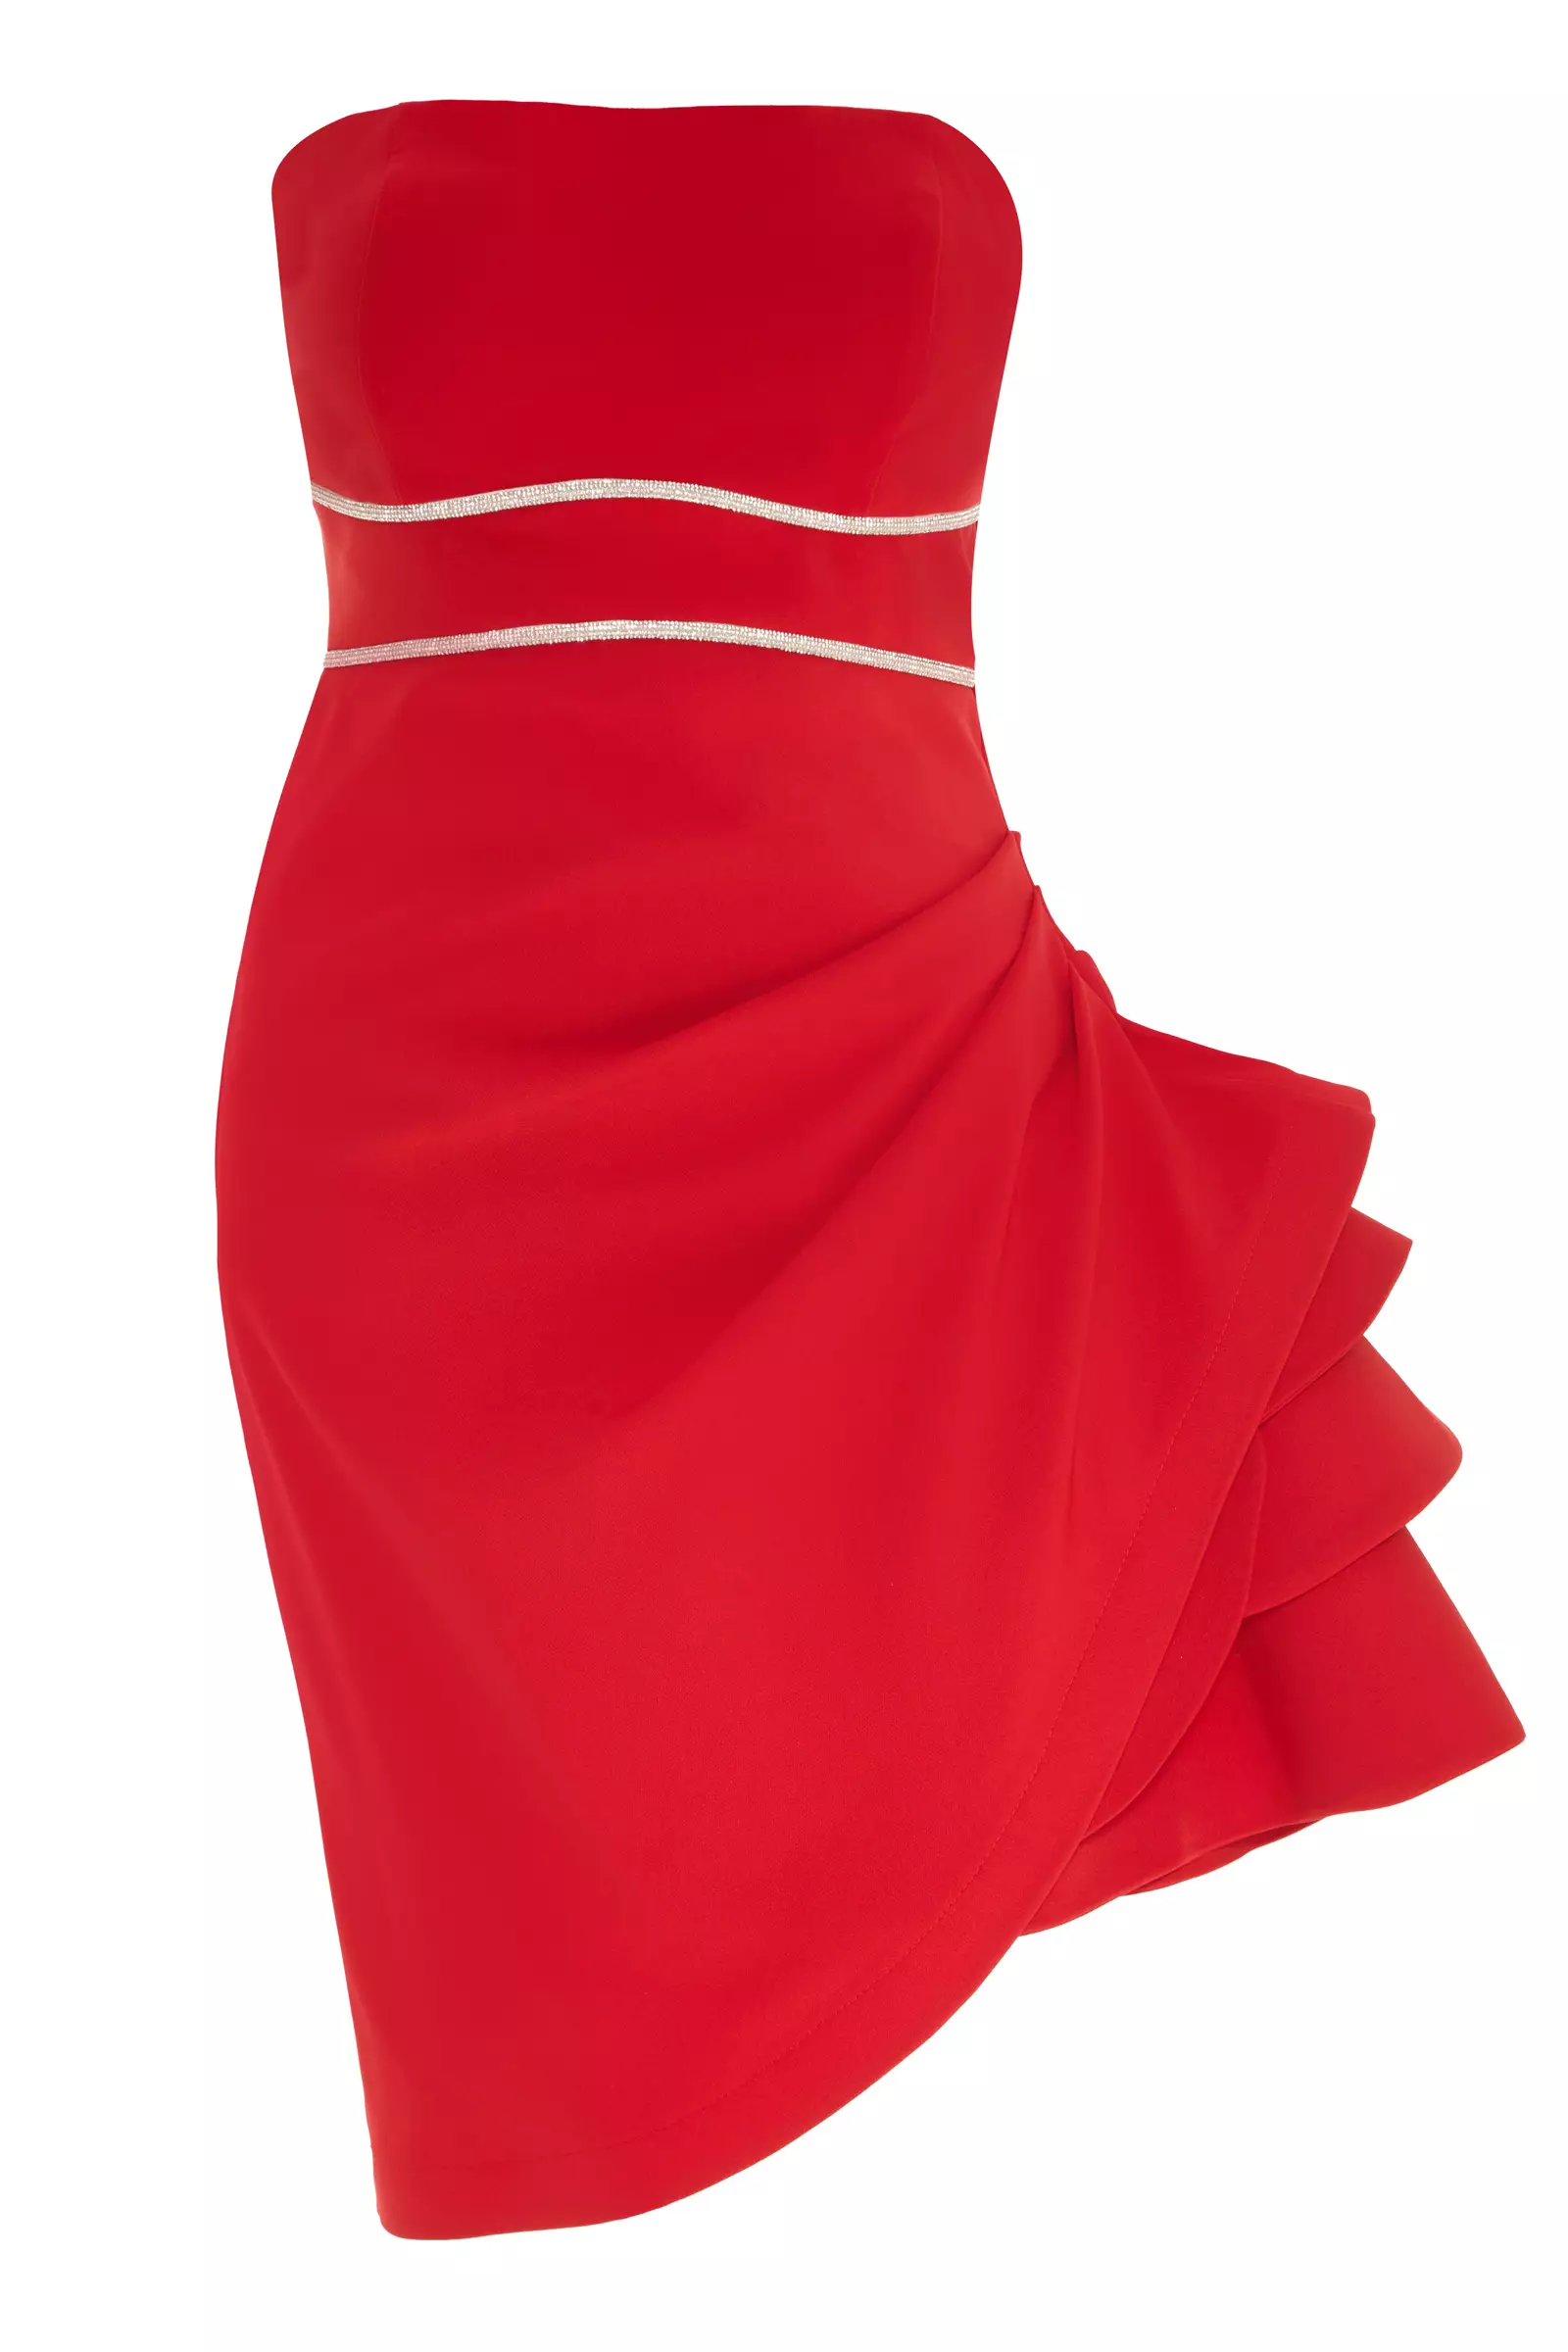 Red crepe strapless mini dress